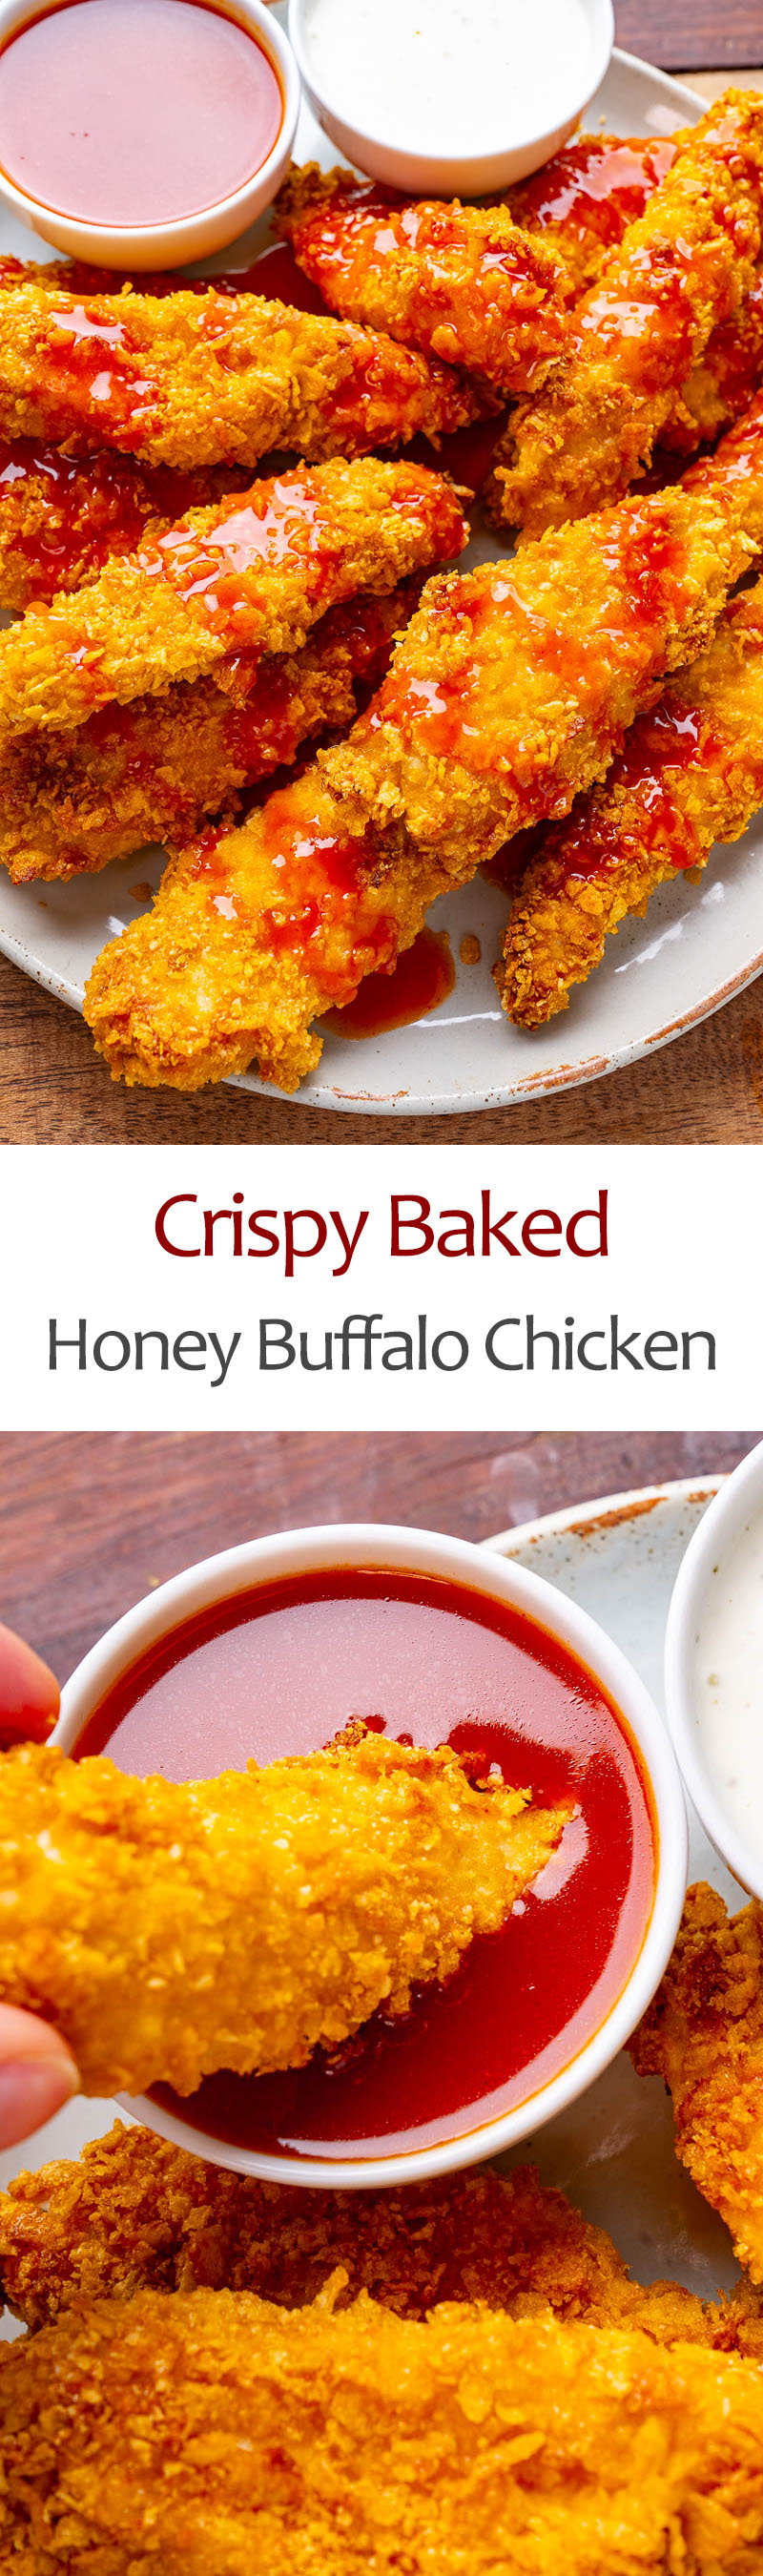 Crispy Baked Honey Buffalo Chicken